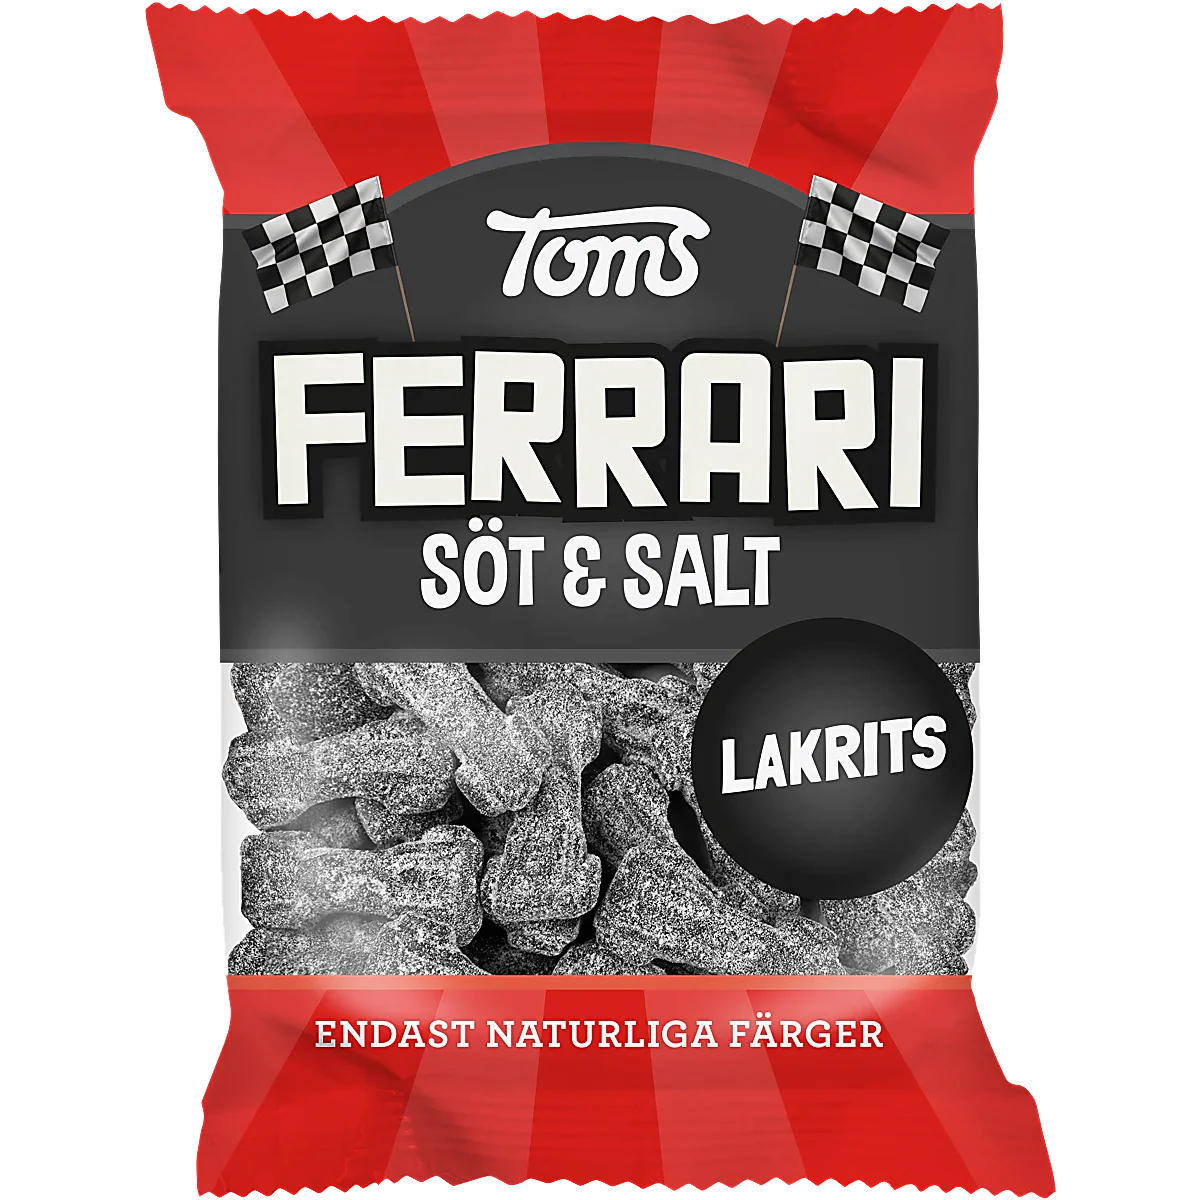 Toms Ferrari süß und salzig by Swedish Candy Store